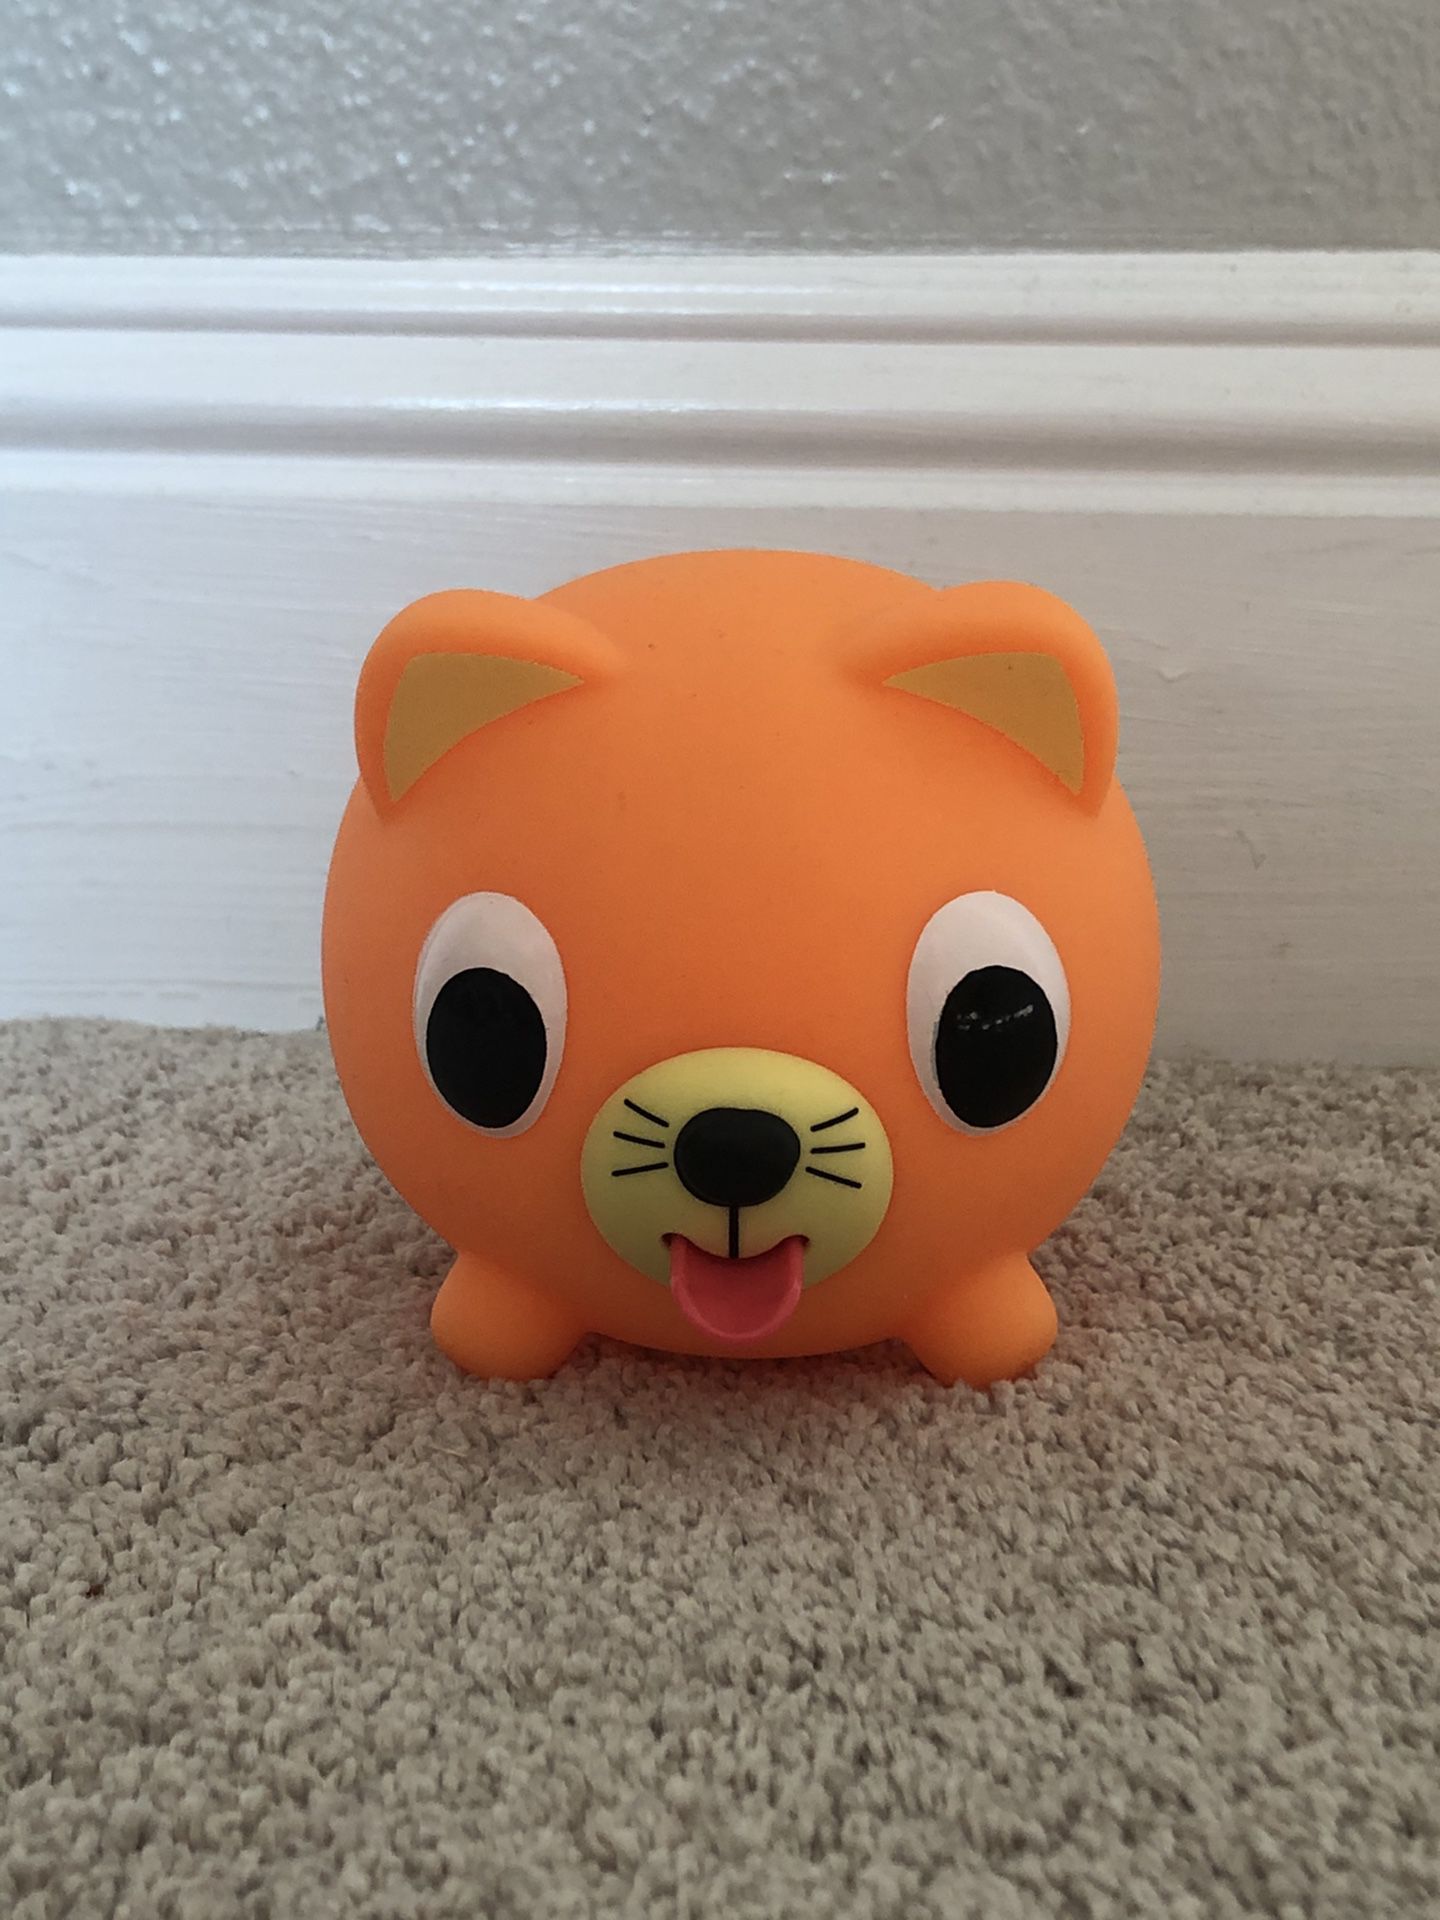 Orange Squeezing Toy